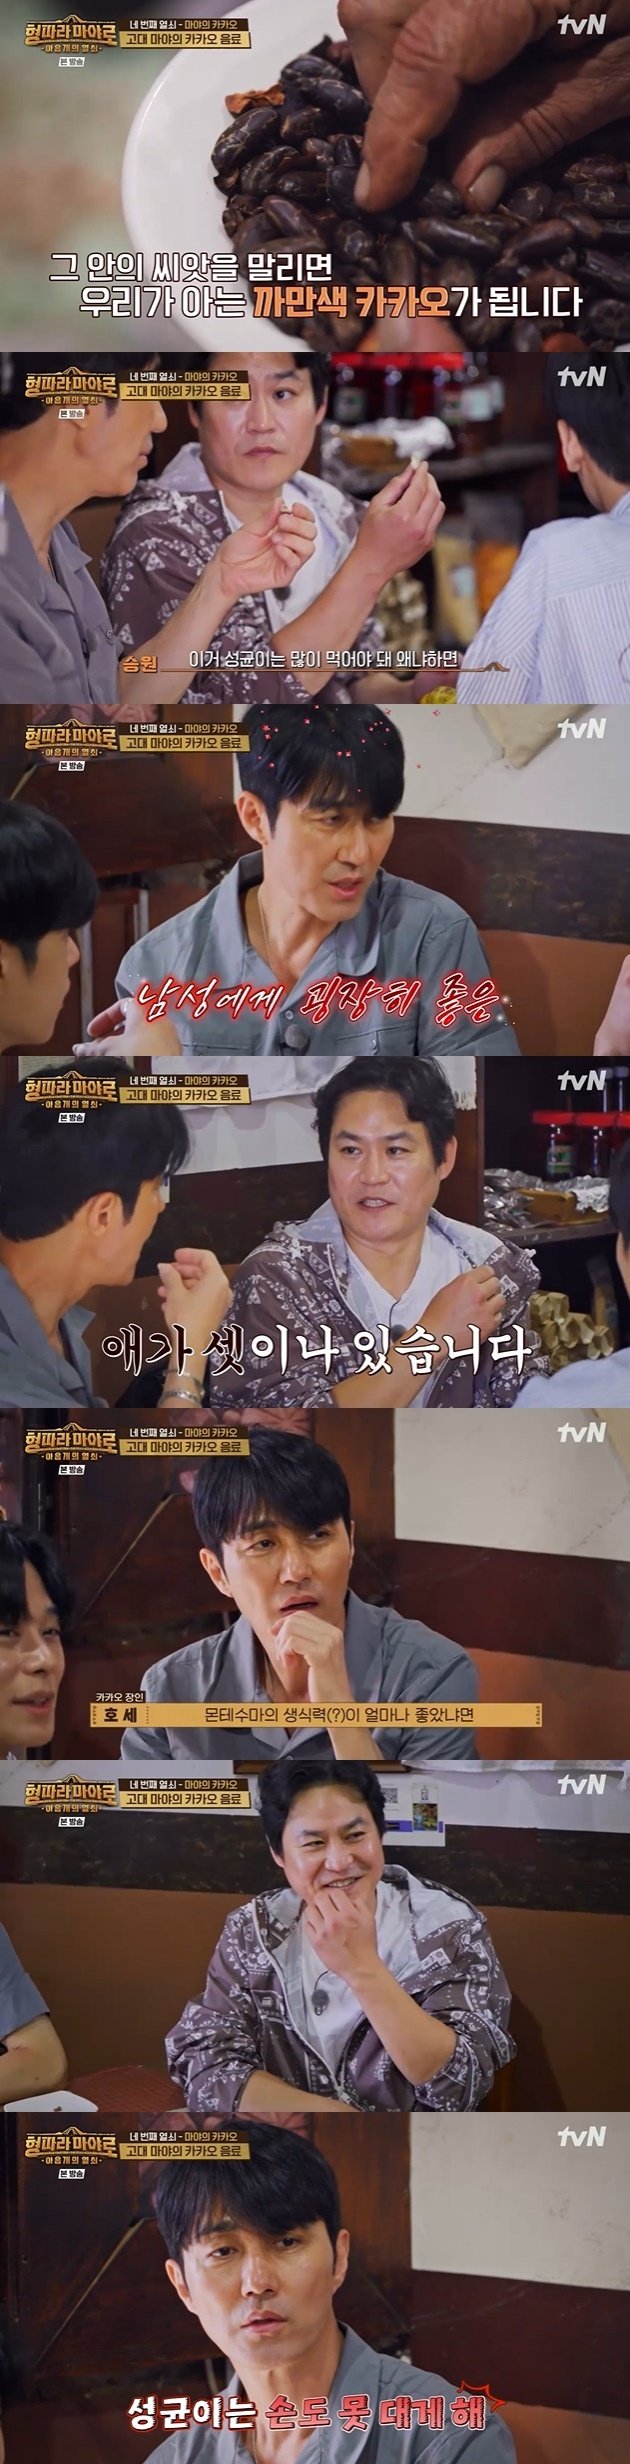 tvN '형따라 마야로' 캡처